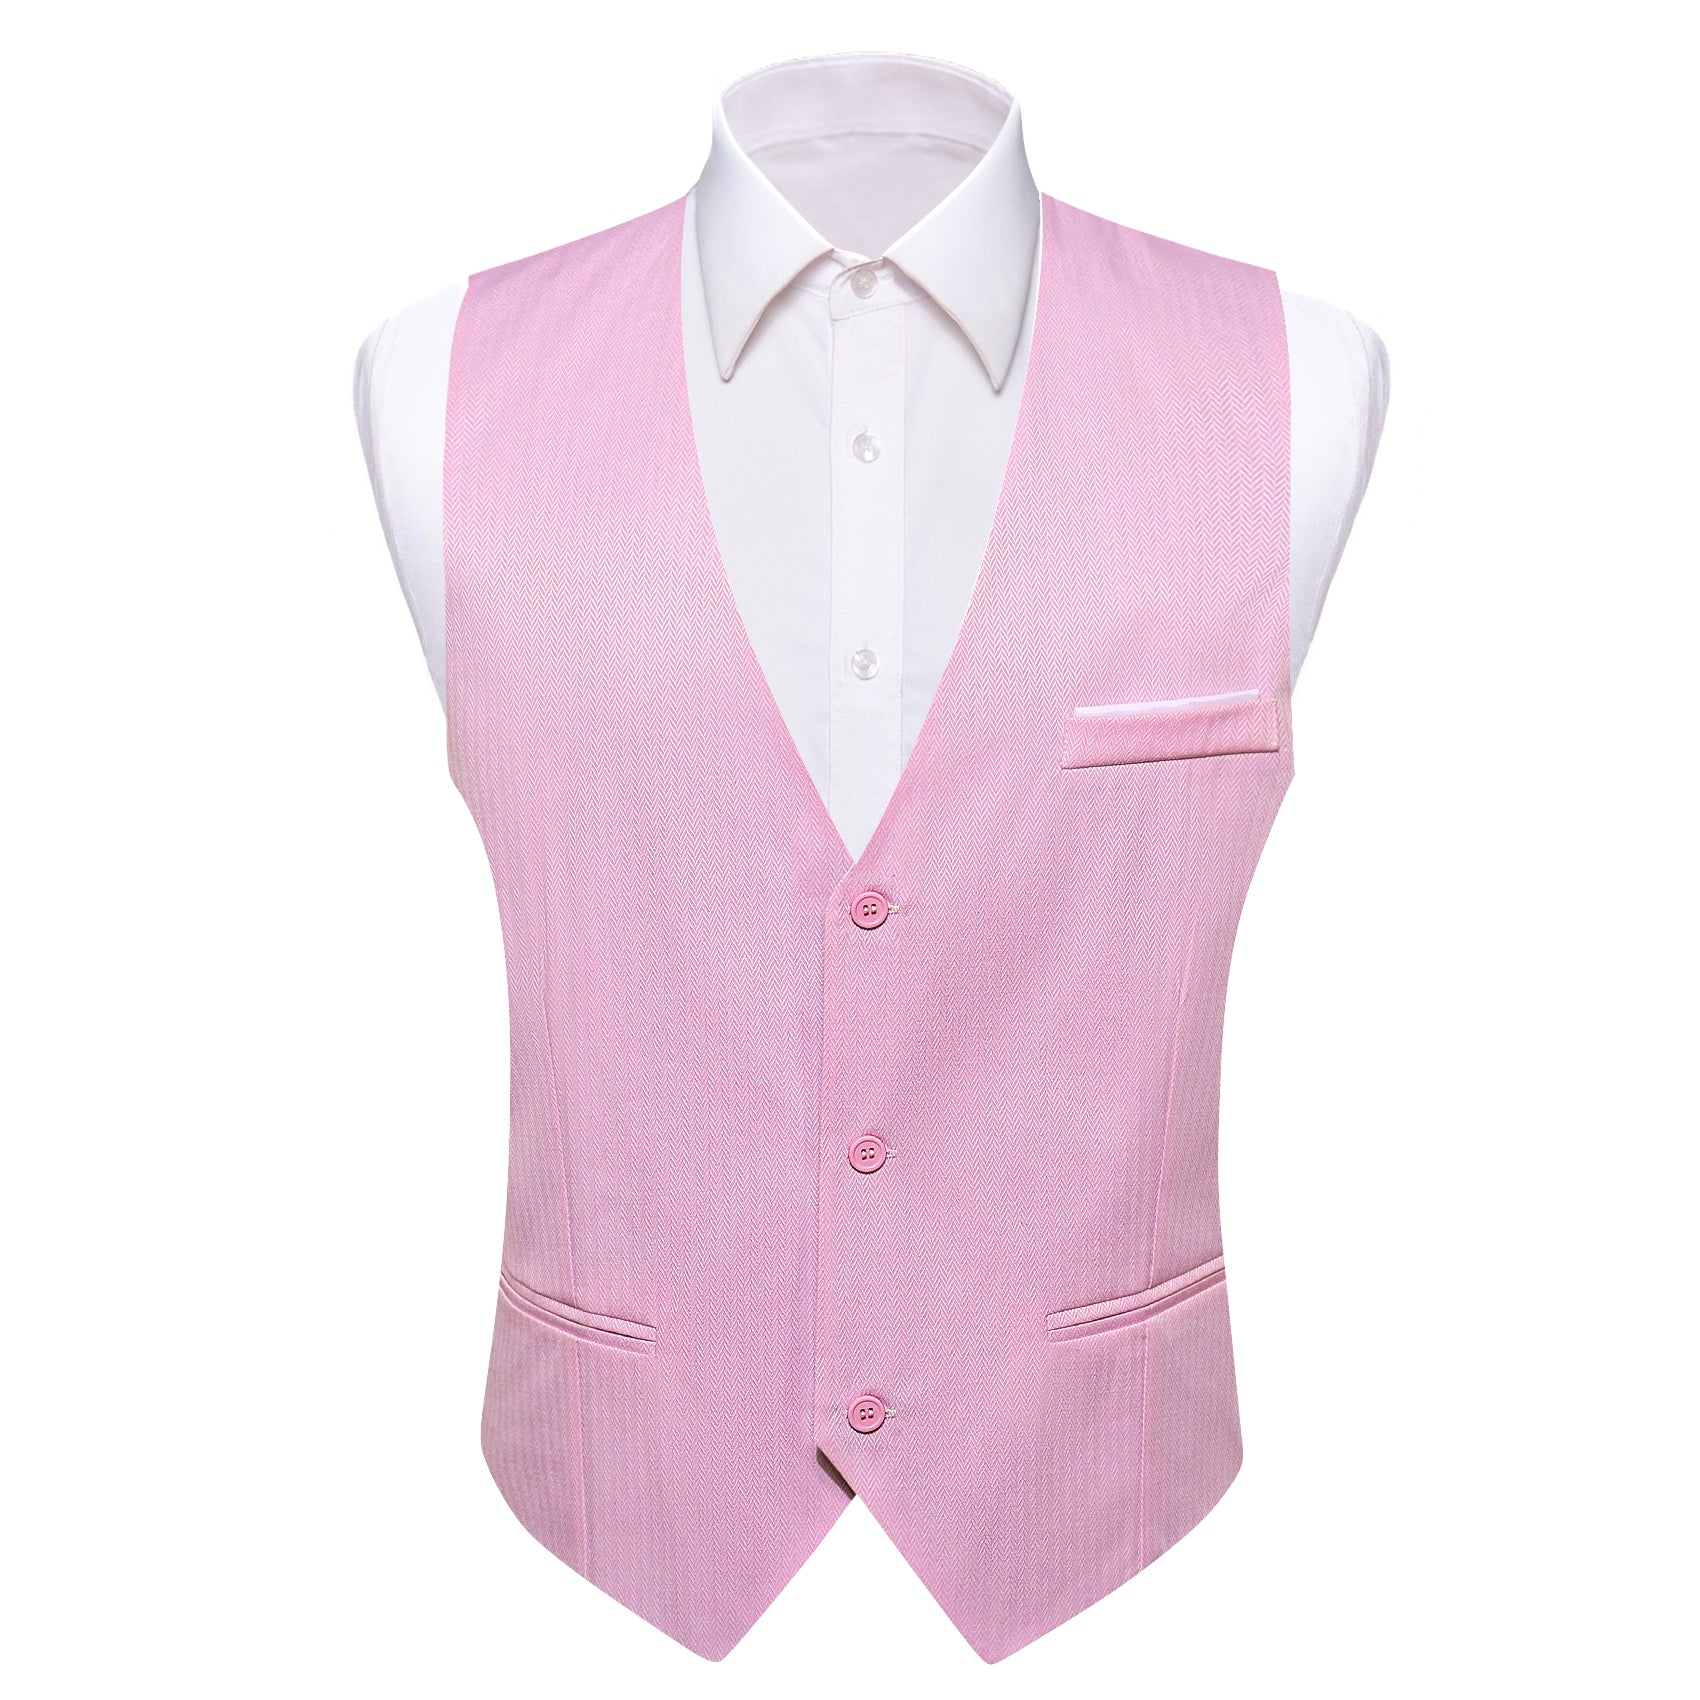 Barry Wang Vest Men's Pink Solid V-Neck Waistcoat Suit for Business